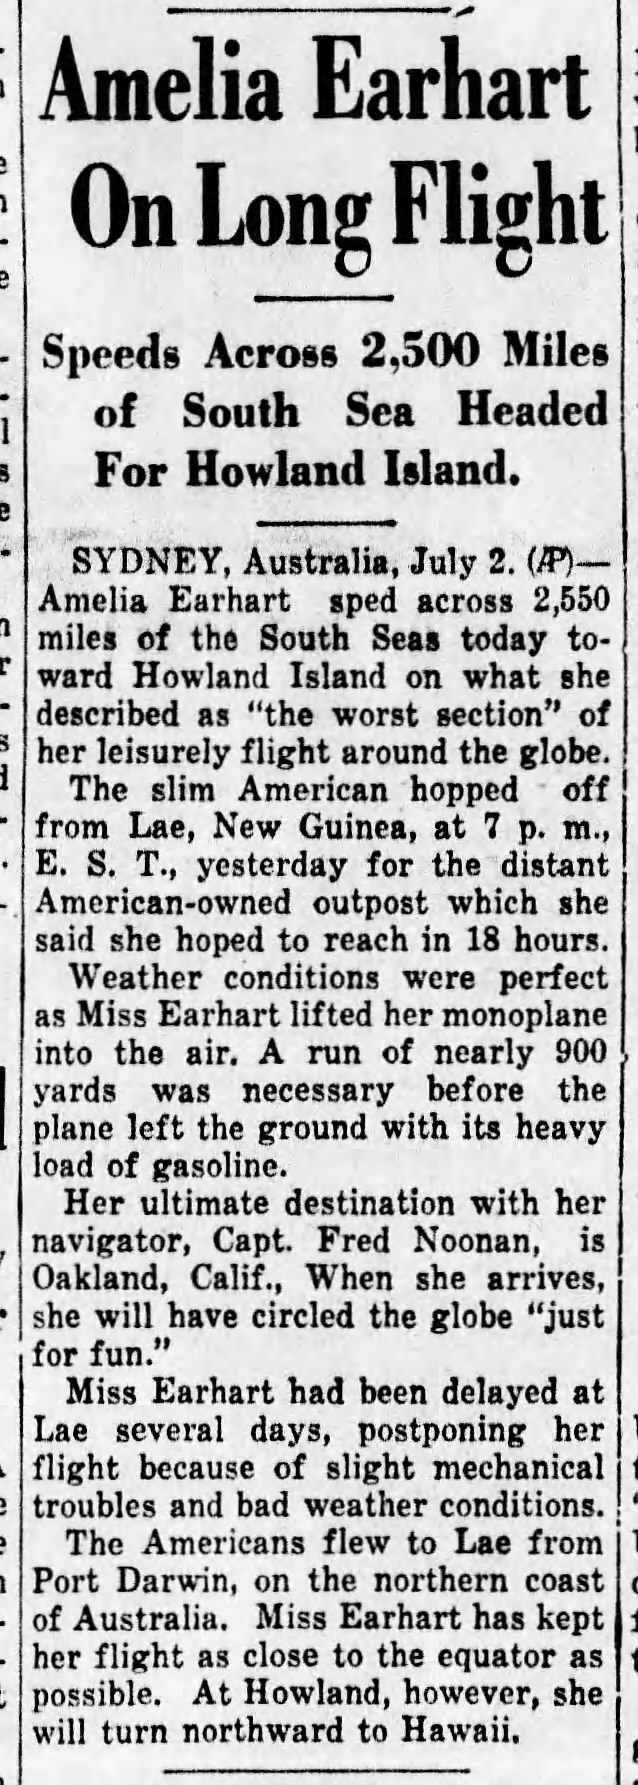 Amelia Earhart leaves on final flight to Howland Island